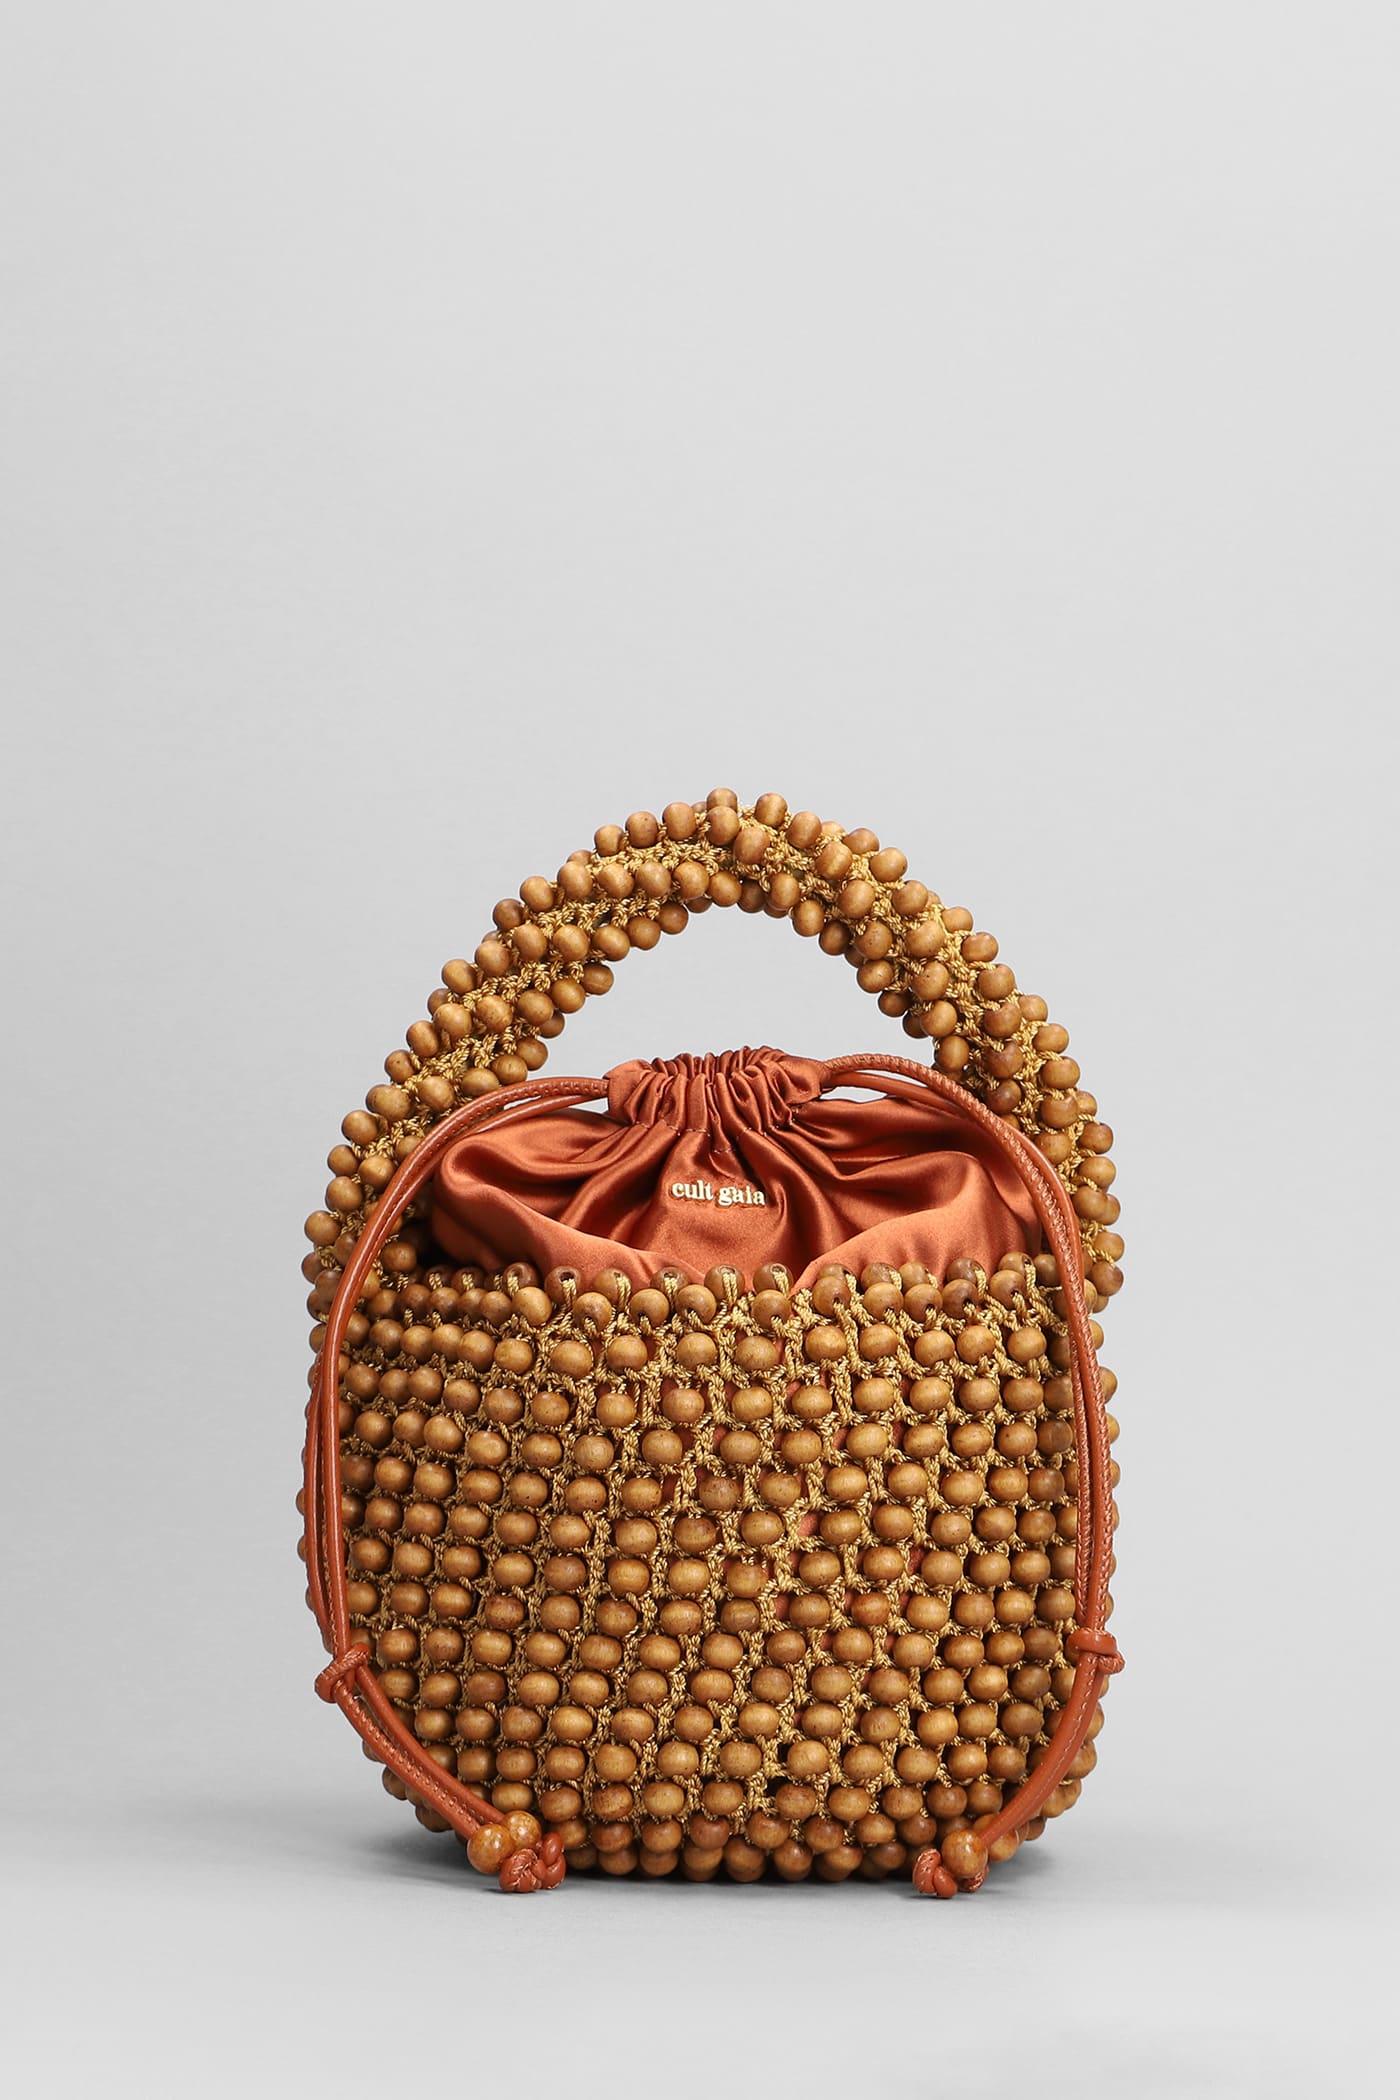 Cora Hand Bag In Brown Wood